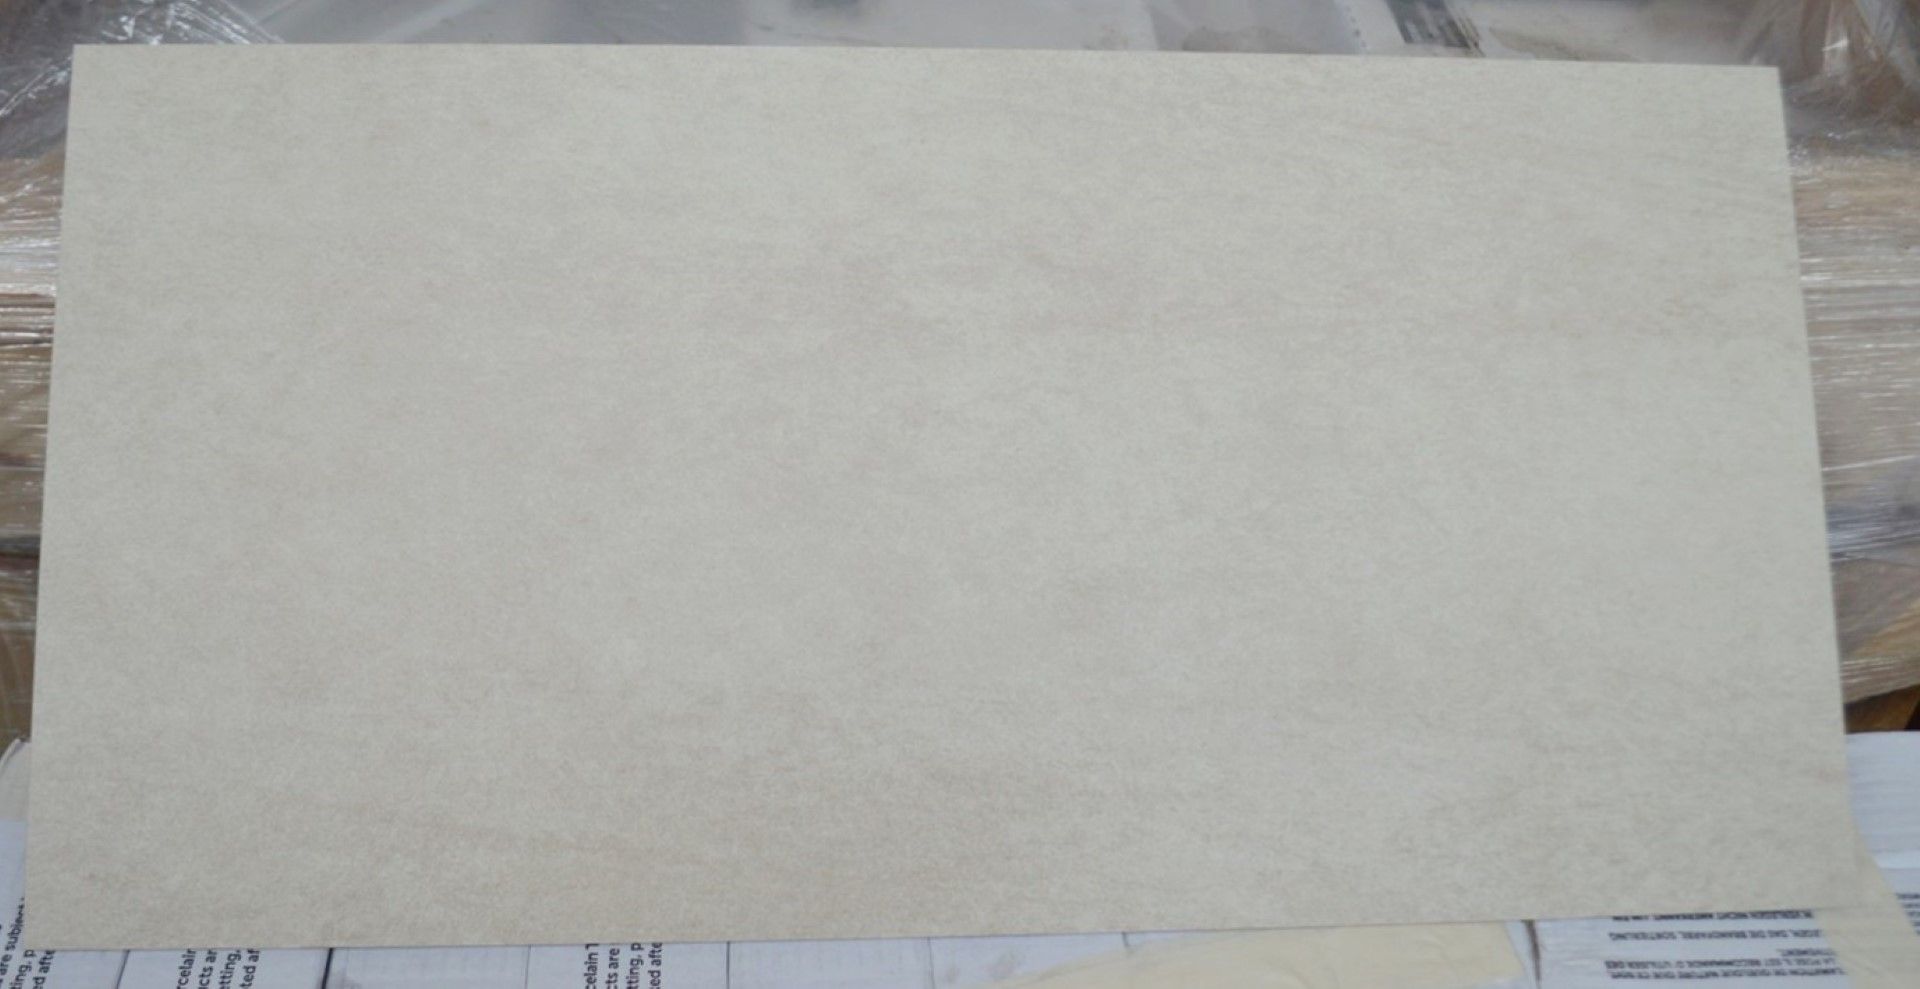 6 x Boxes of RAK Porcelain Floor or Wall Tiles - Concrete Sand Design Design in Beige - 30 x 60 cm - Image 3 of 8